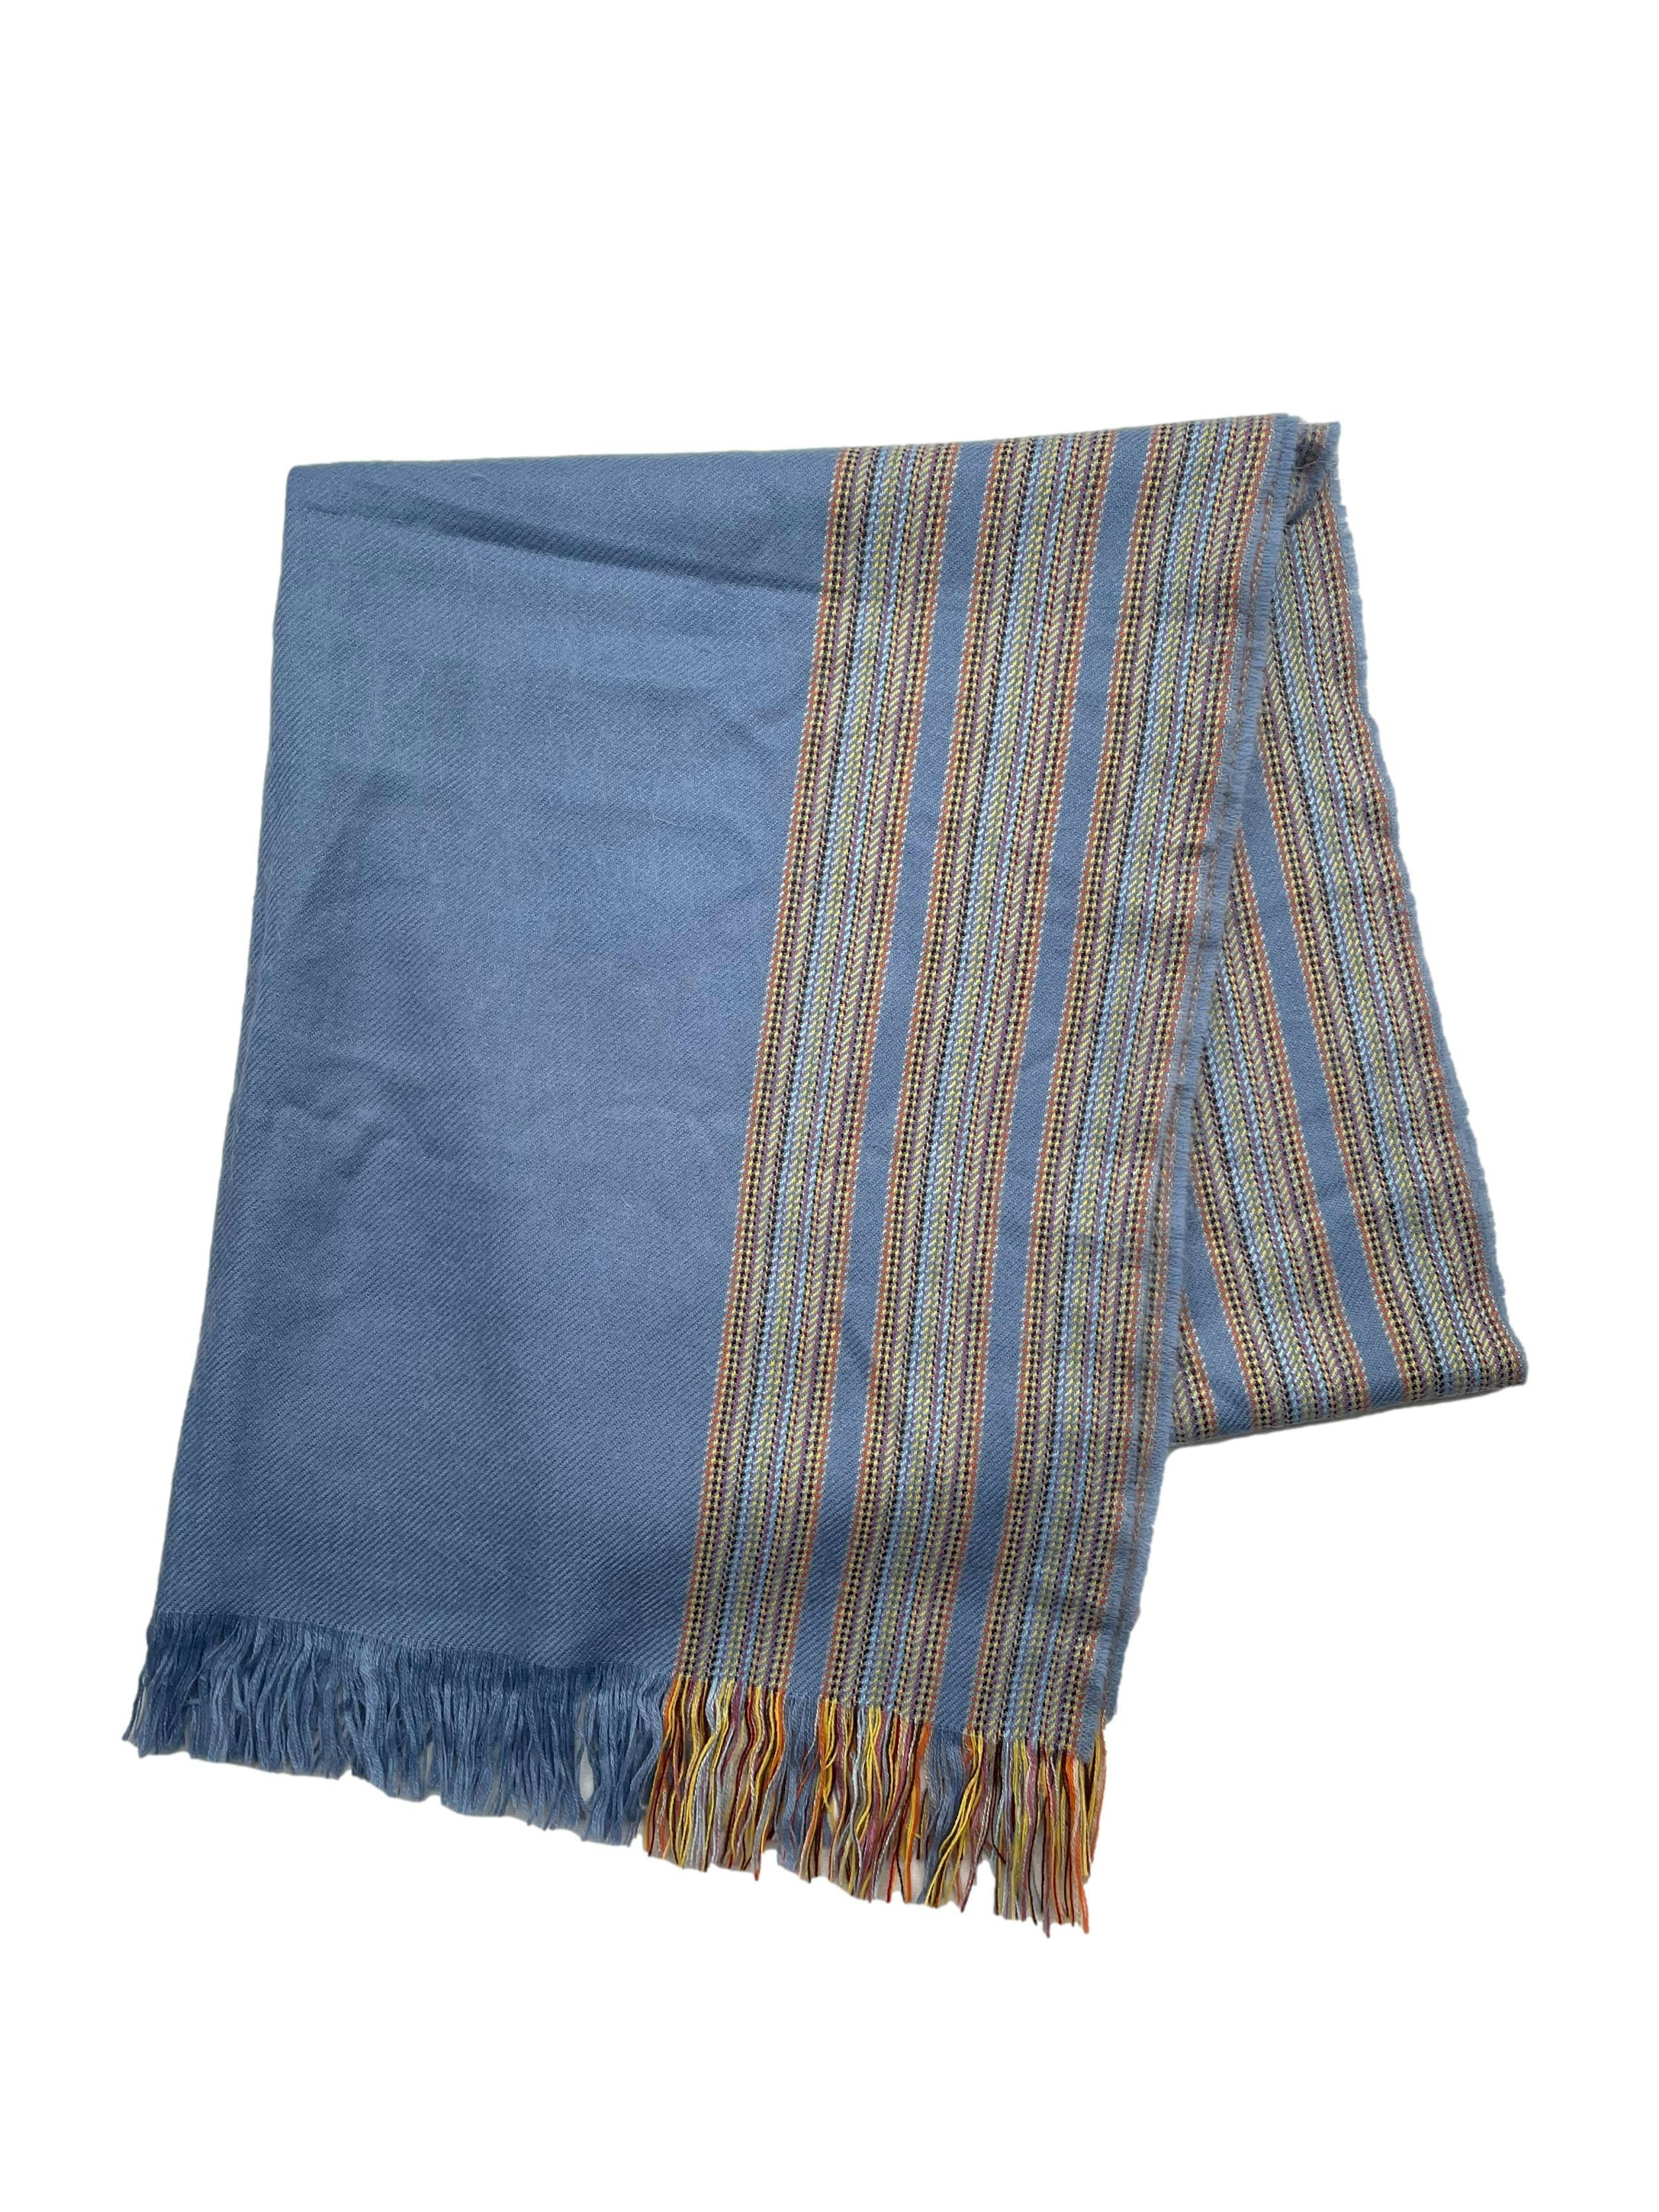 Bufanda tipo chal gris azulado con lineas en tonos cálidos y bordes desflecados. Medidas 72x 170cm.